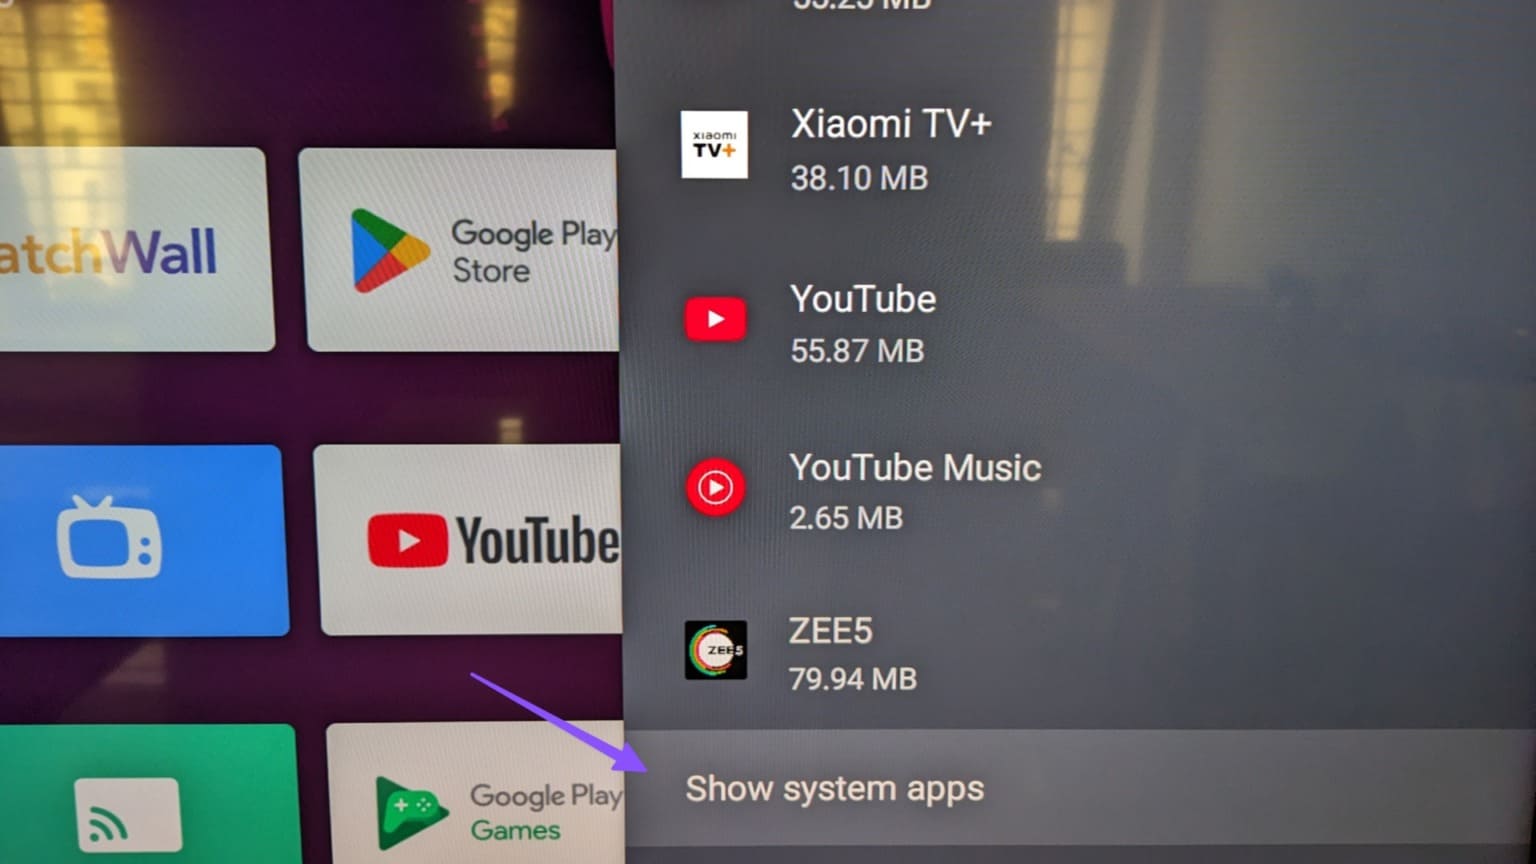 أفضل 9 إصلاحات لعدم ظهور Android TV في Google Home على iPhone و Android - %categories